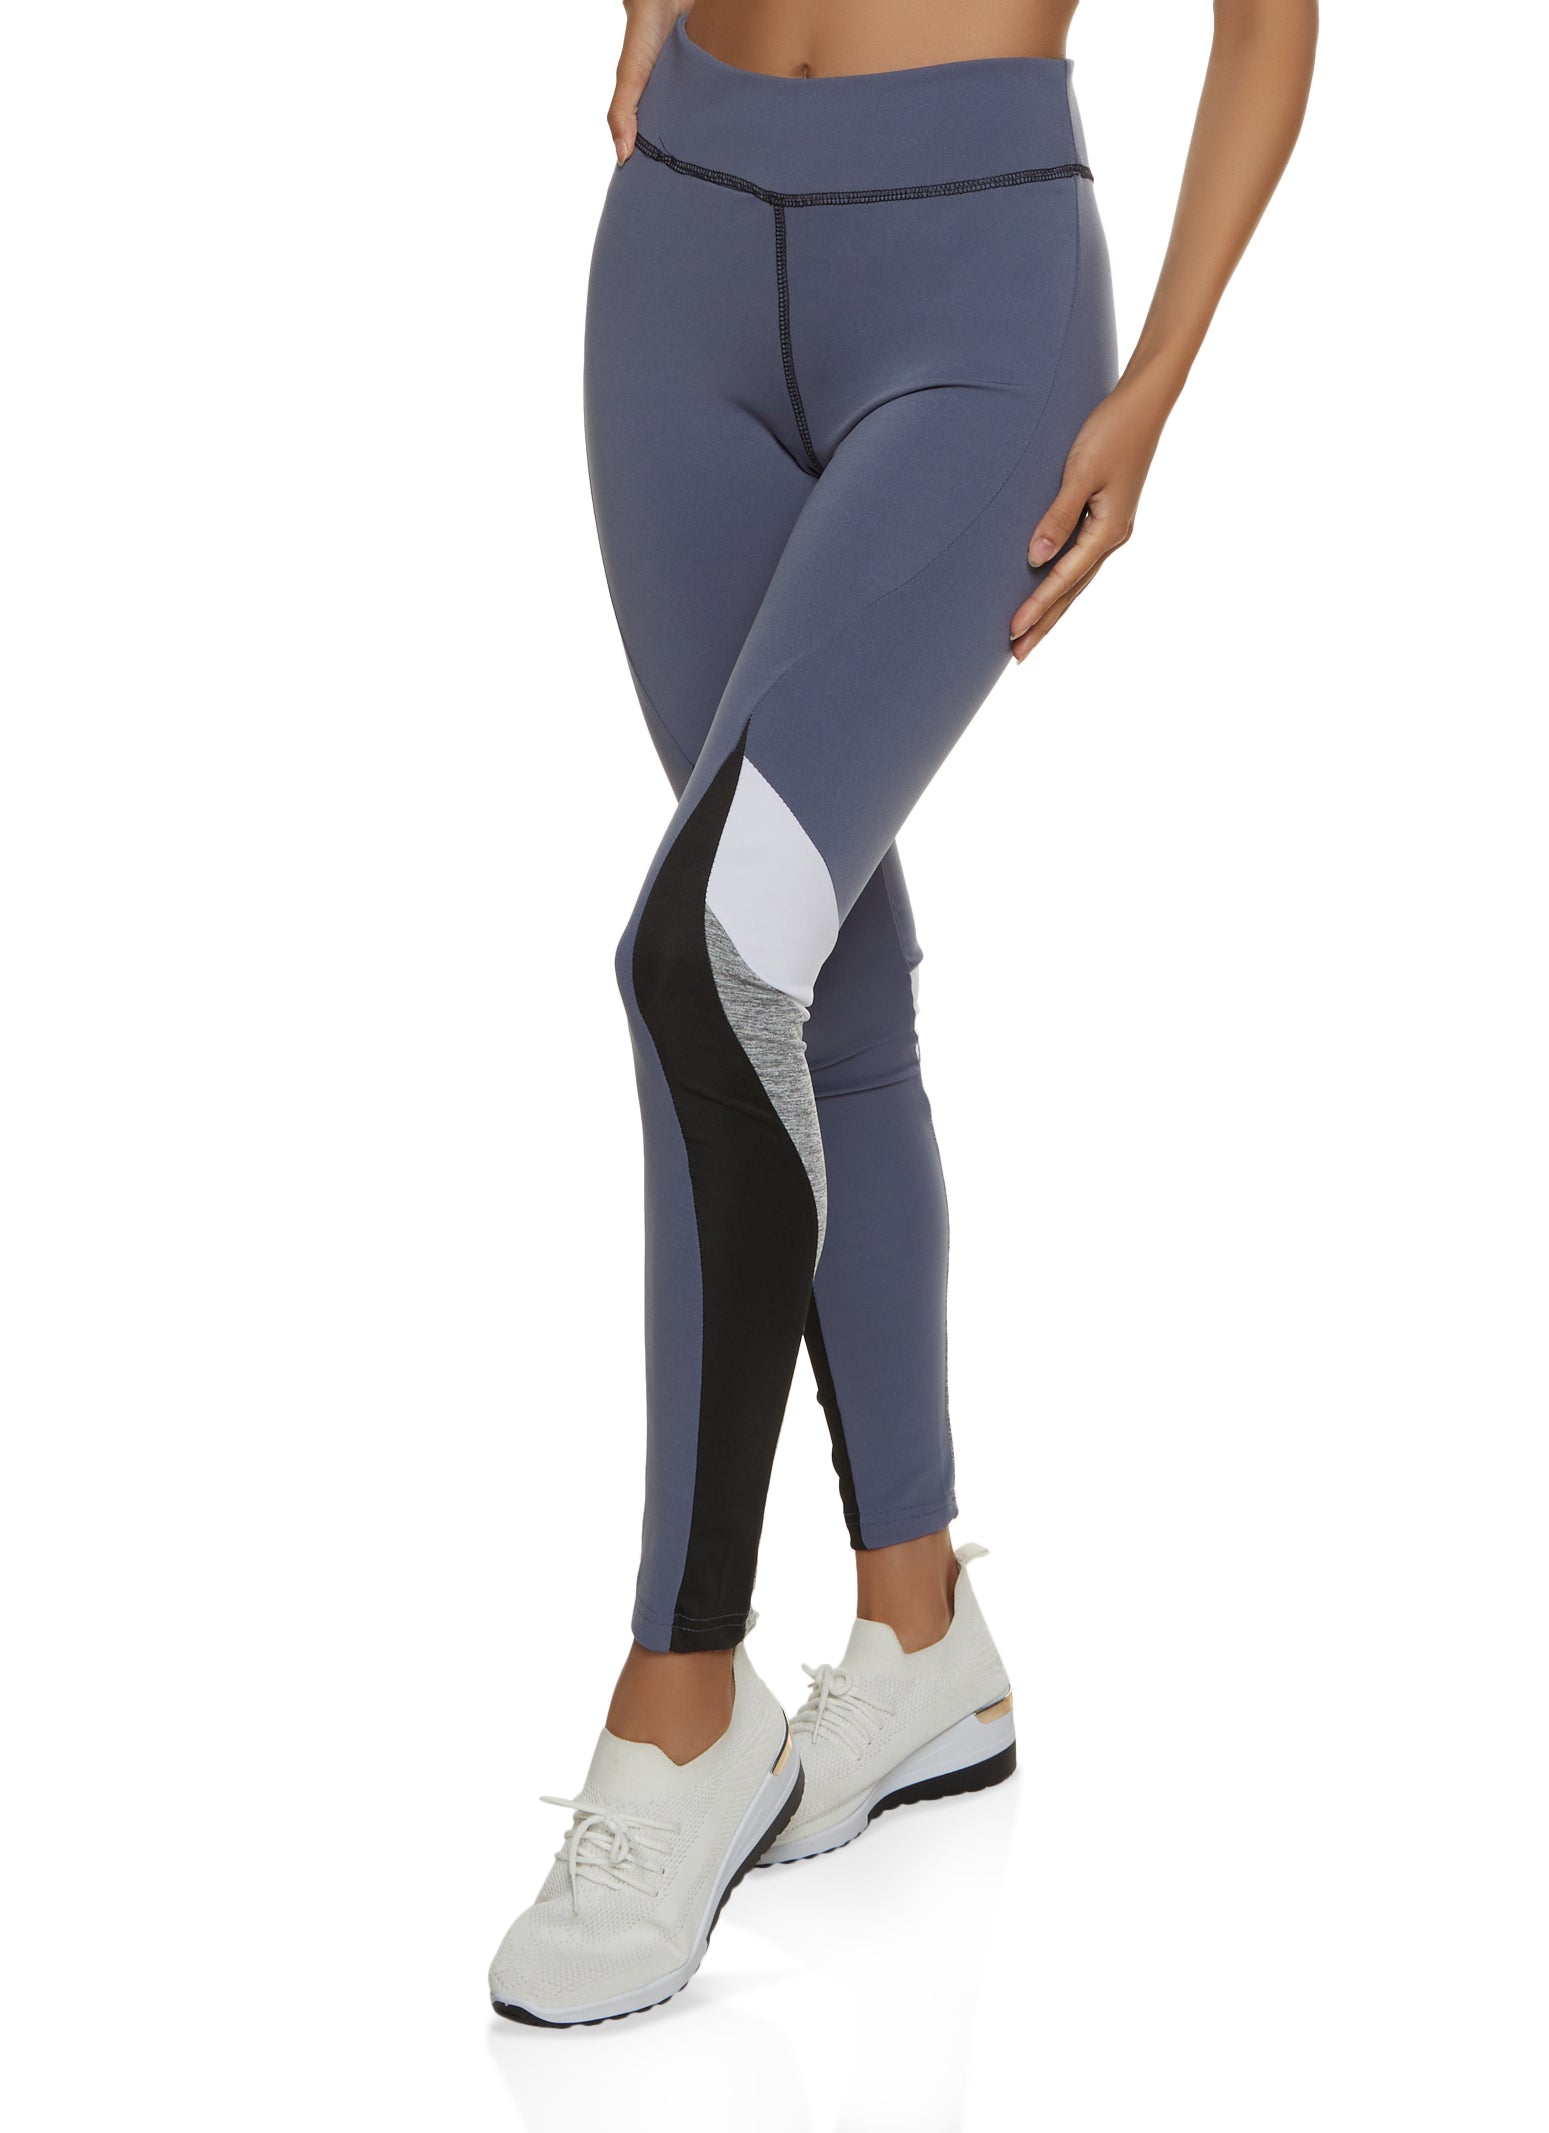 LAB360° Colour Block Leggings - Charcoal Grey | Workout Leggings Women